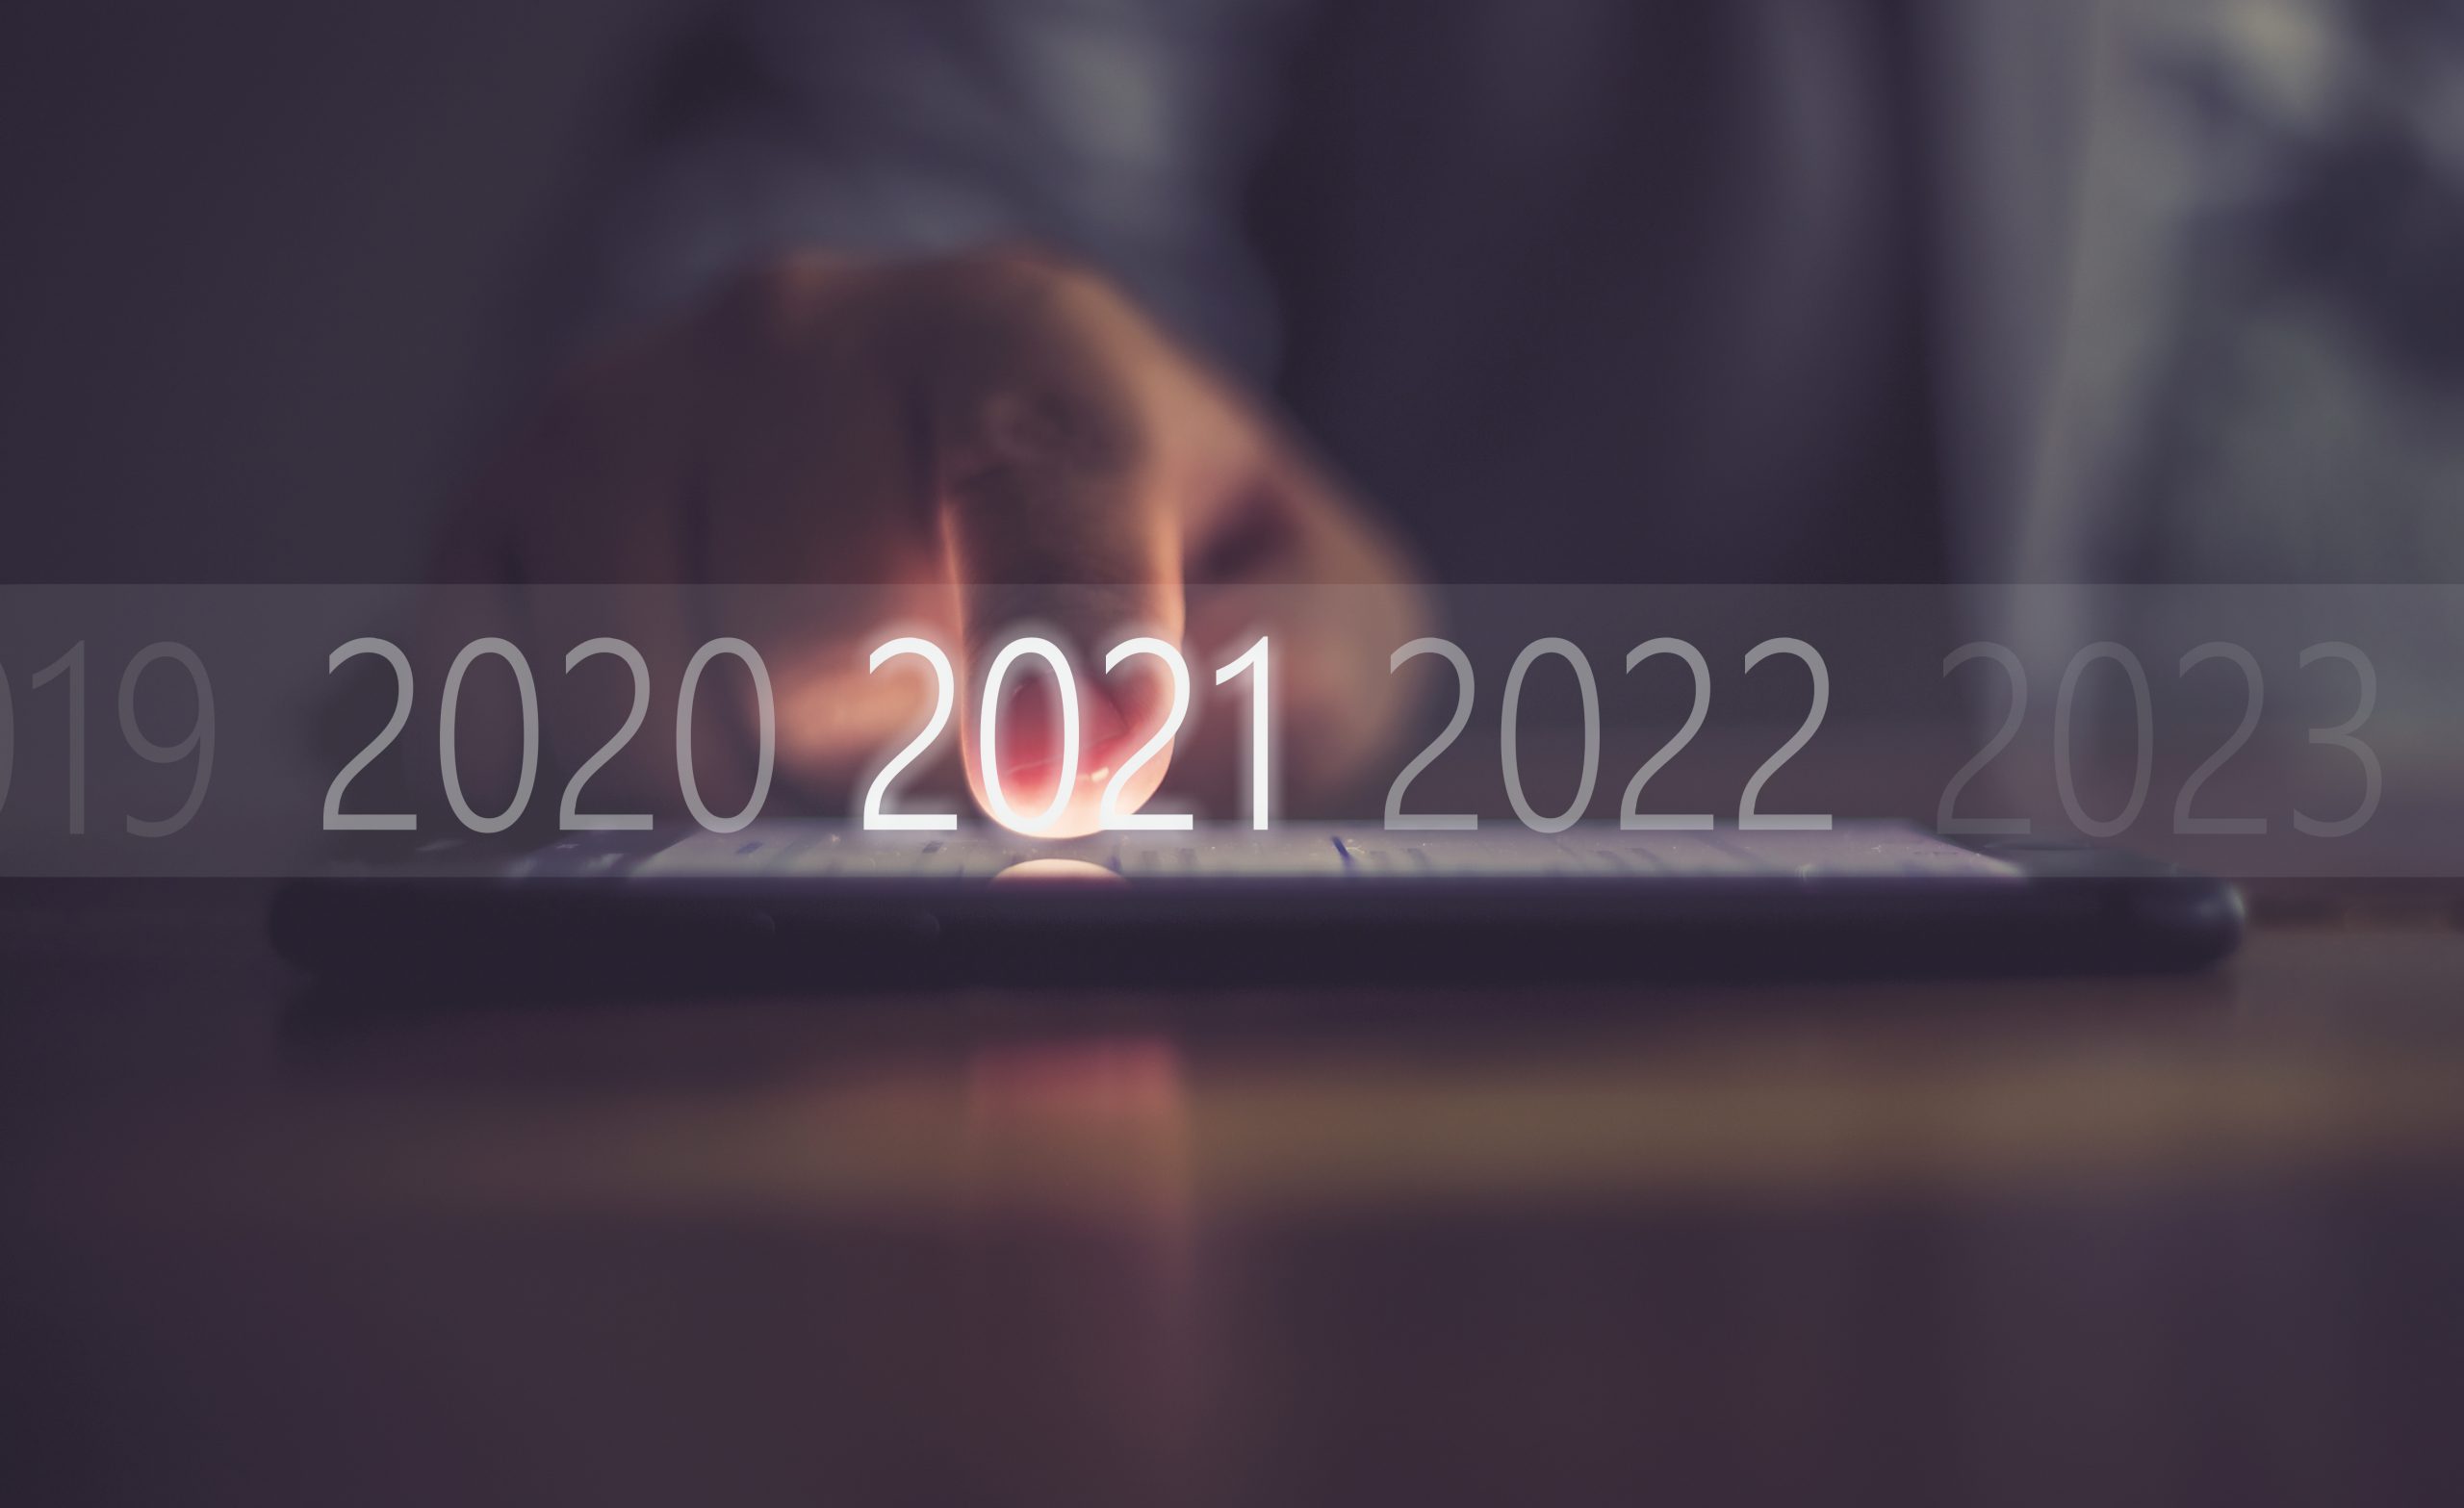 The year 2021: a bright digital marketing future.